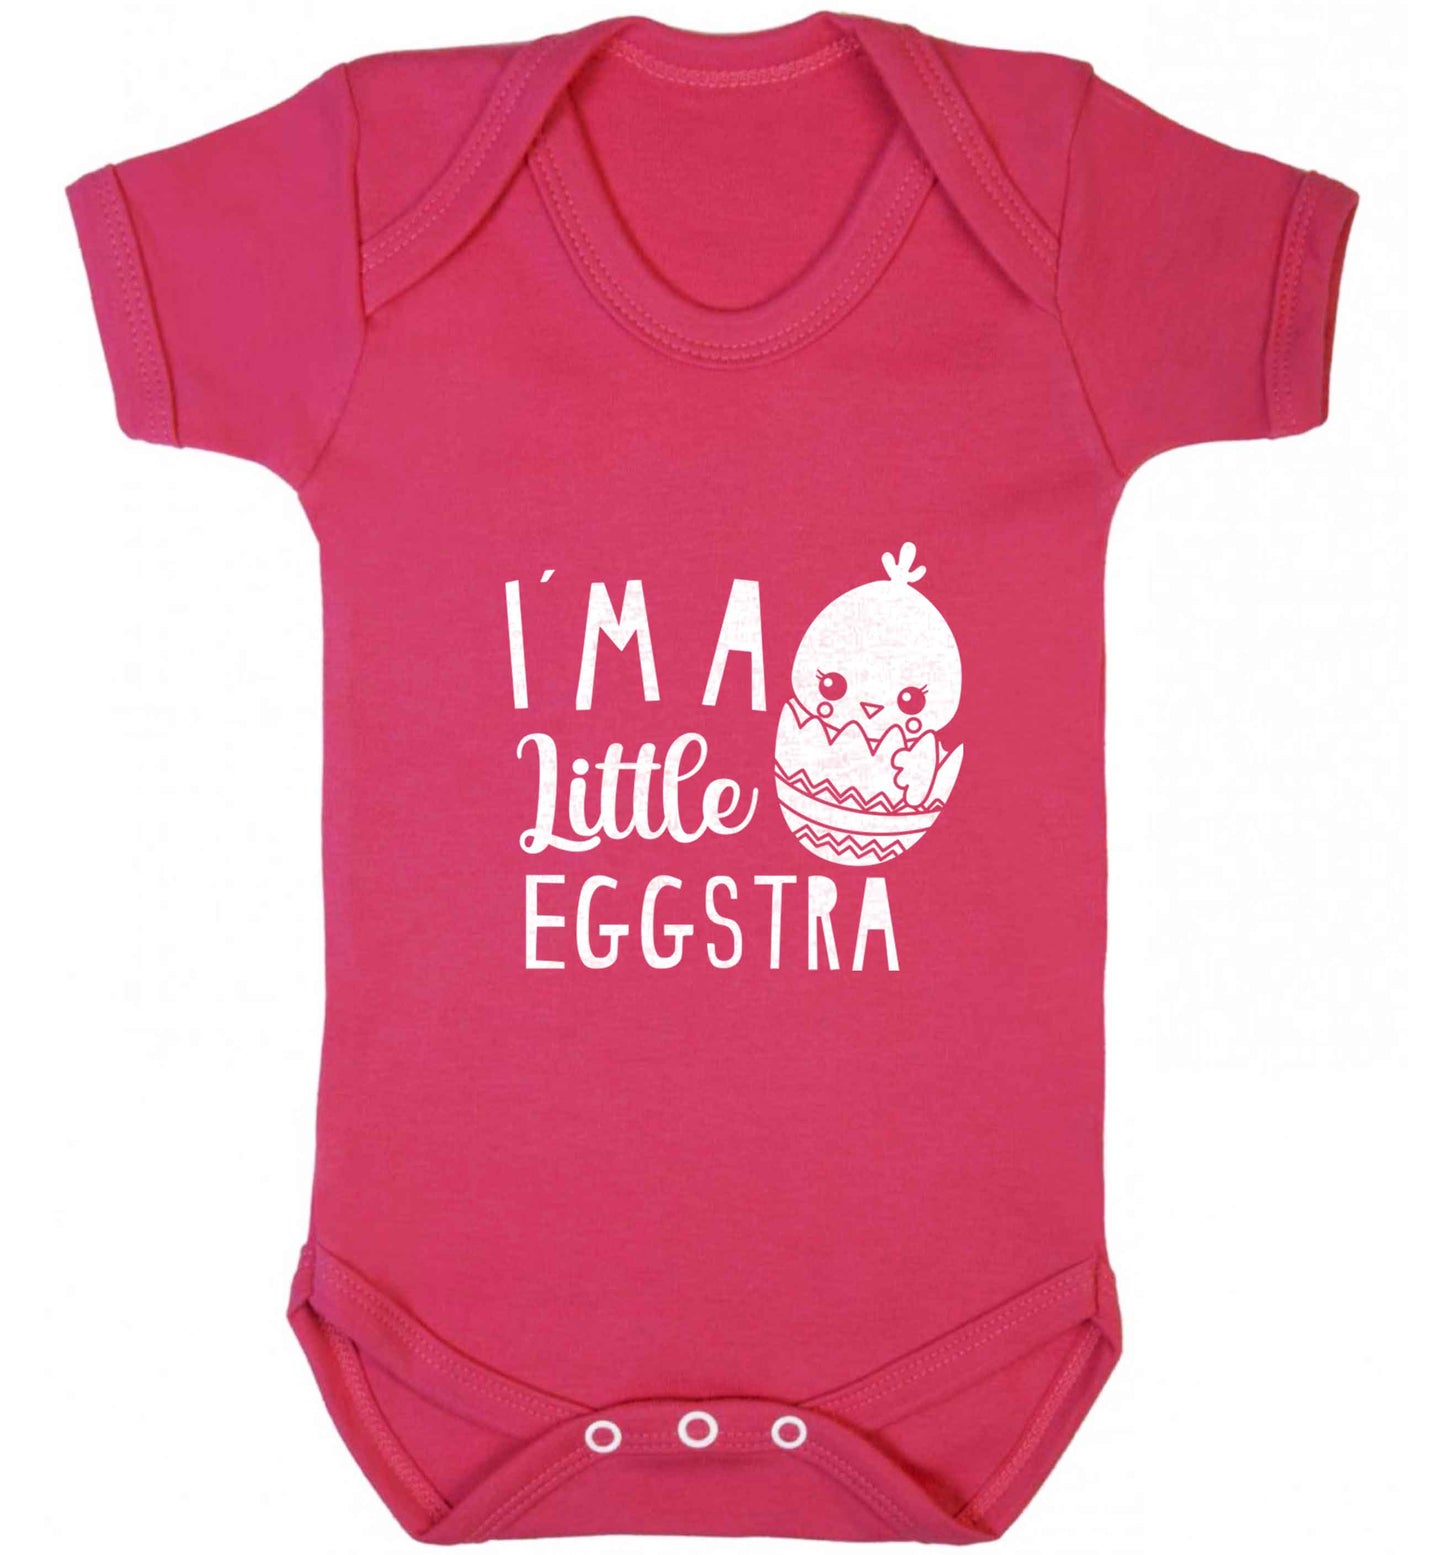 I'm a little eggstra baby vest dark pink 18-24 months